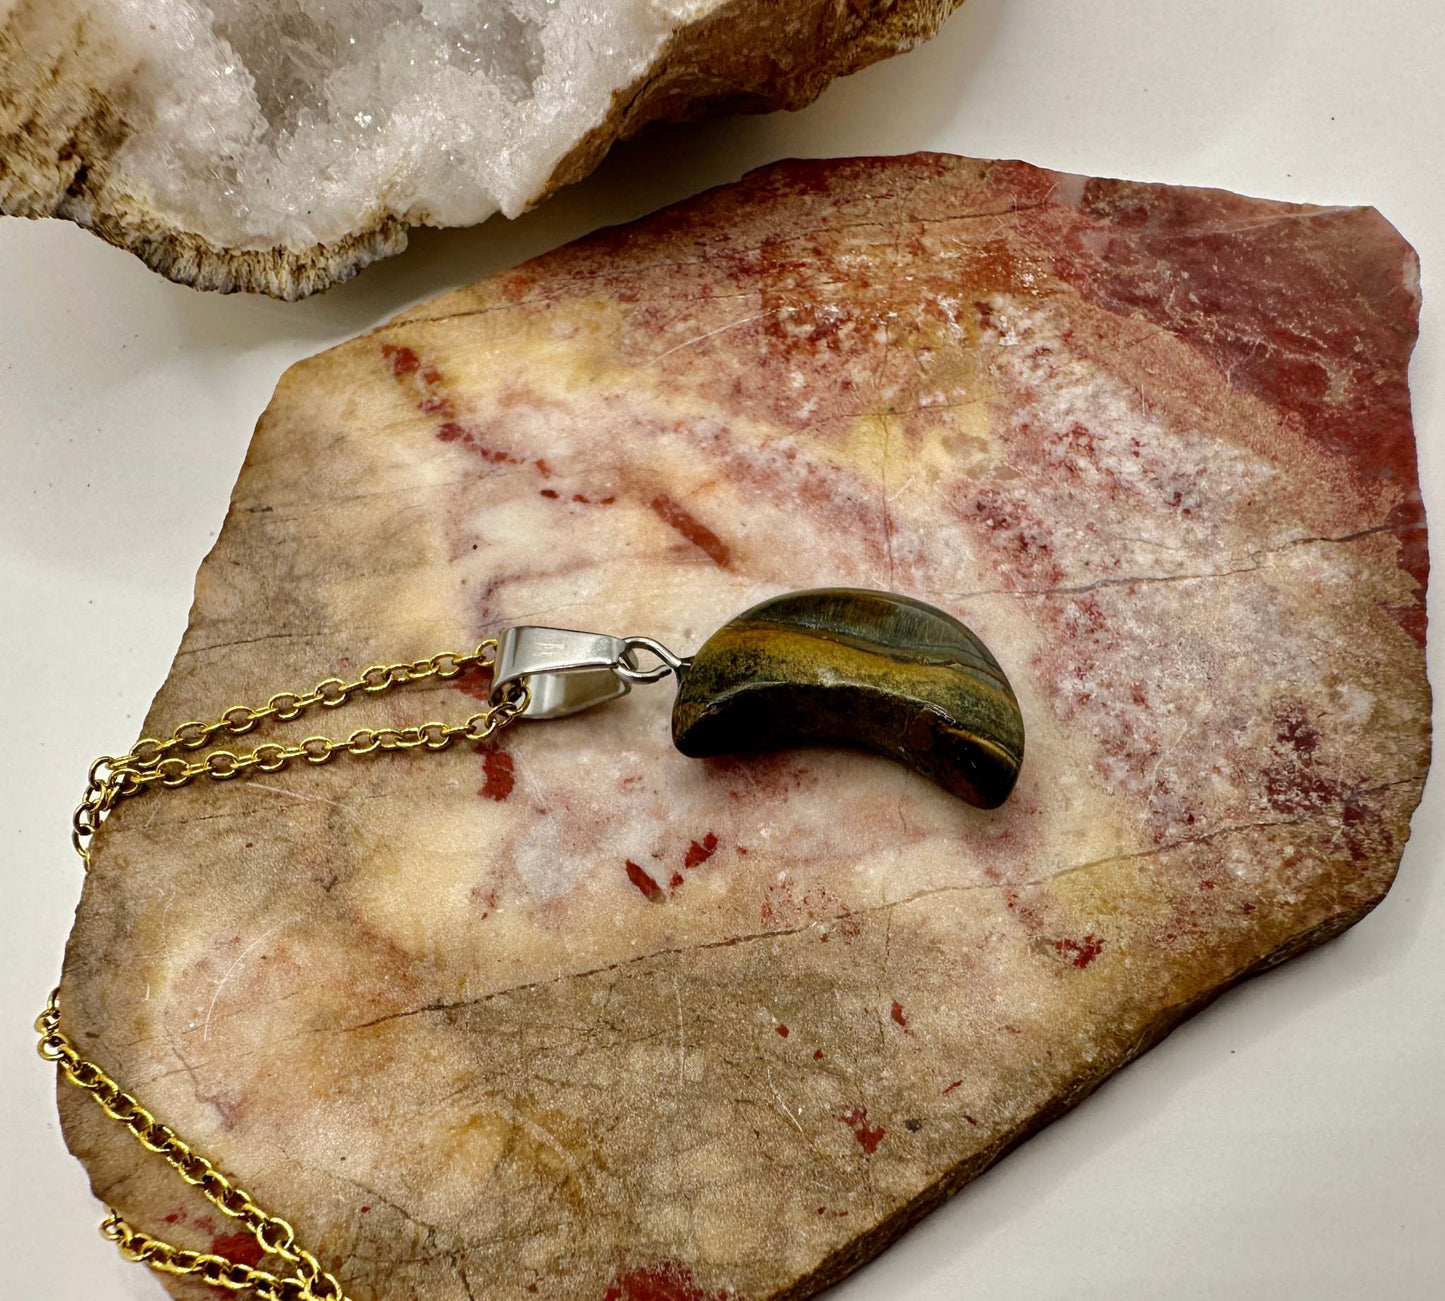 Moon Crystal Pendant Necklace - Tiger Eye